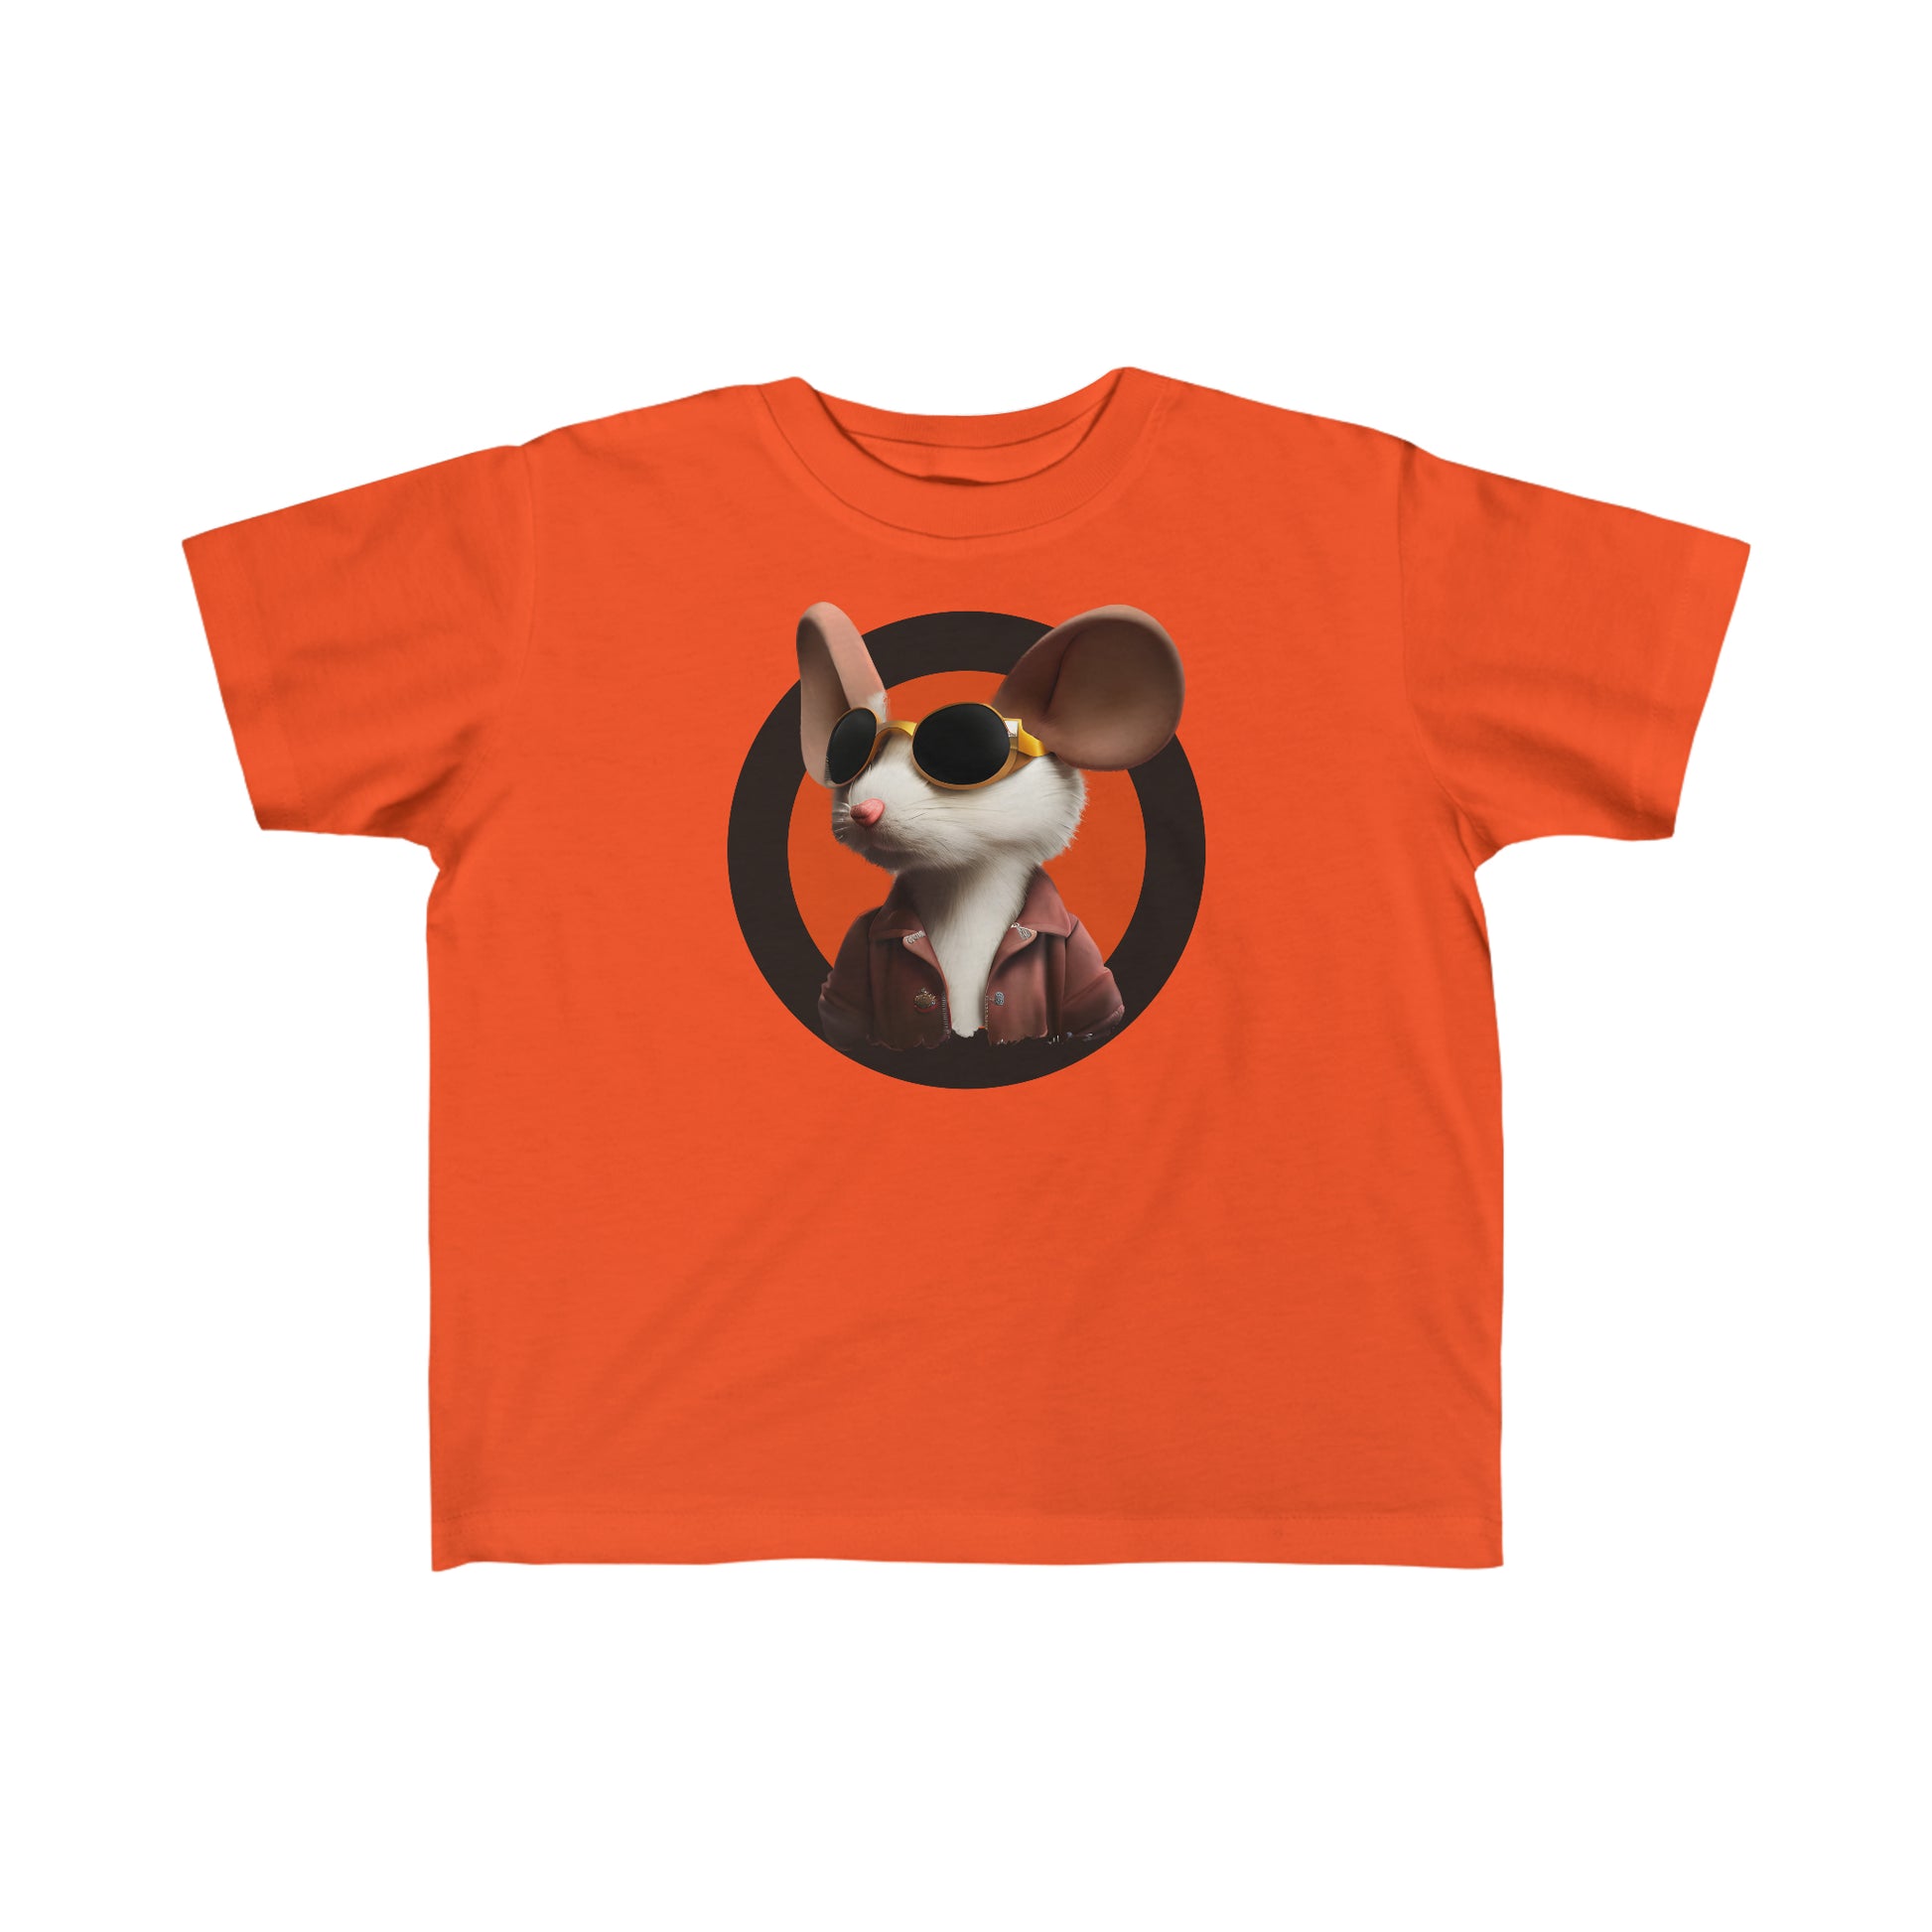 Pilot Mouse t-shirt in Orange